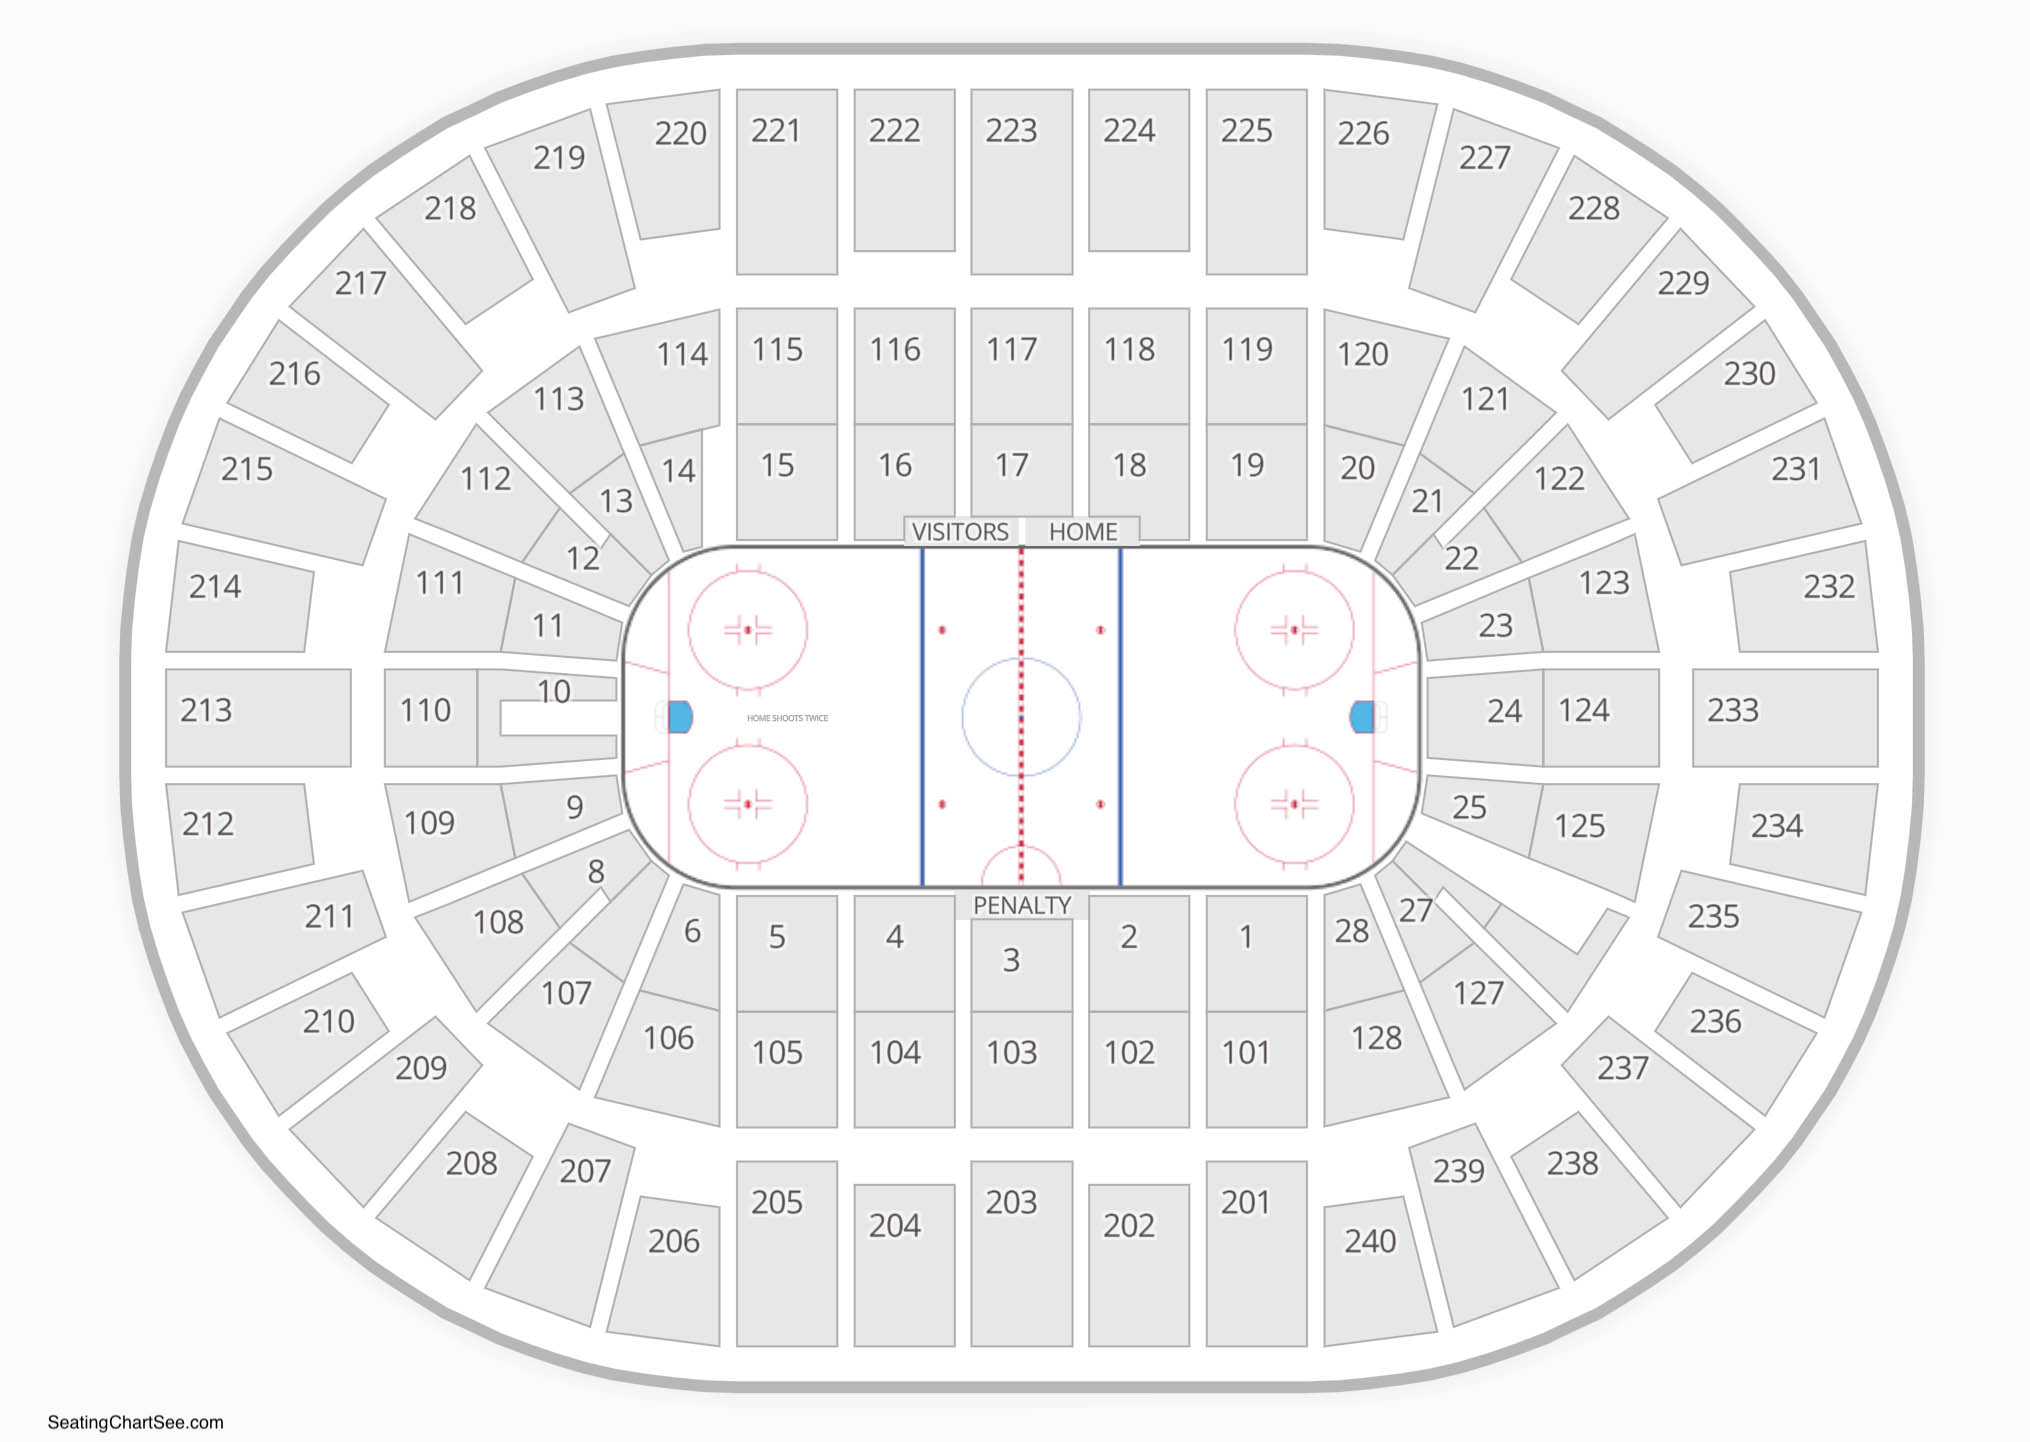 Nassau Coliseum Seating Charts Views